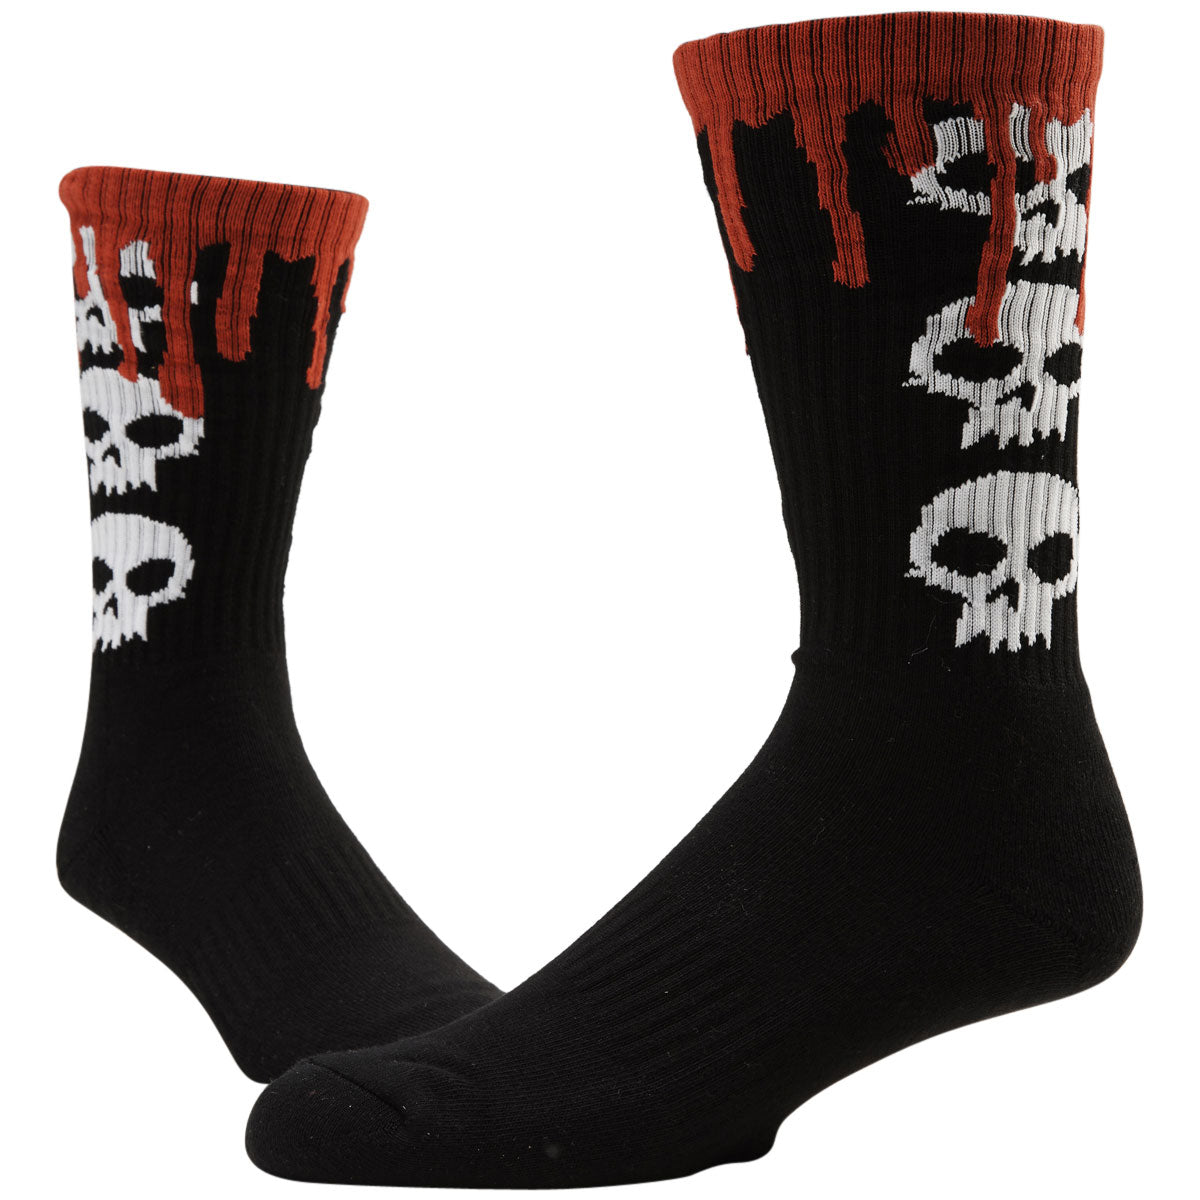 Zero 3 Skull Blood Socks - Black image 2